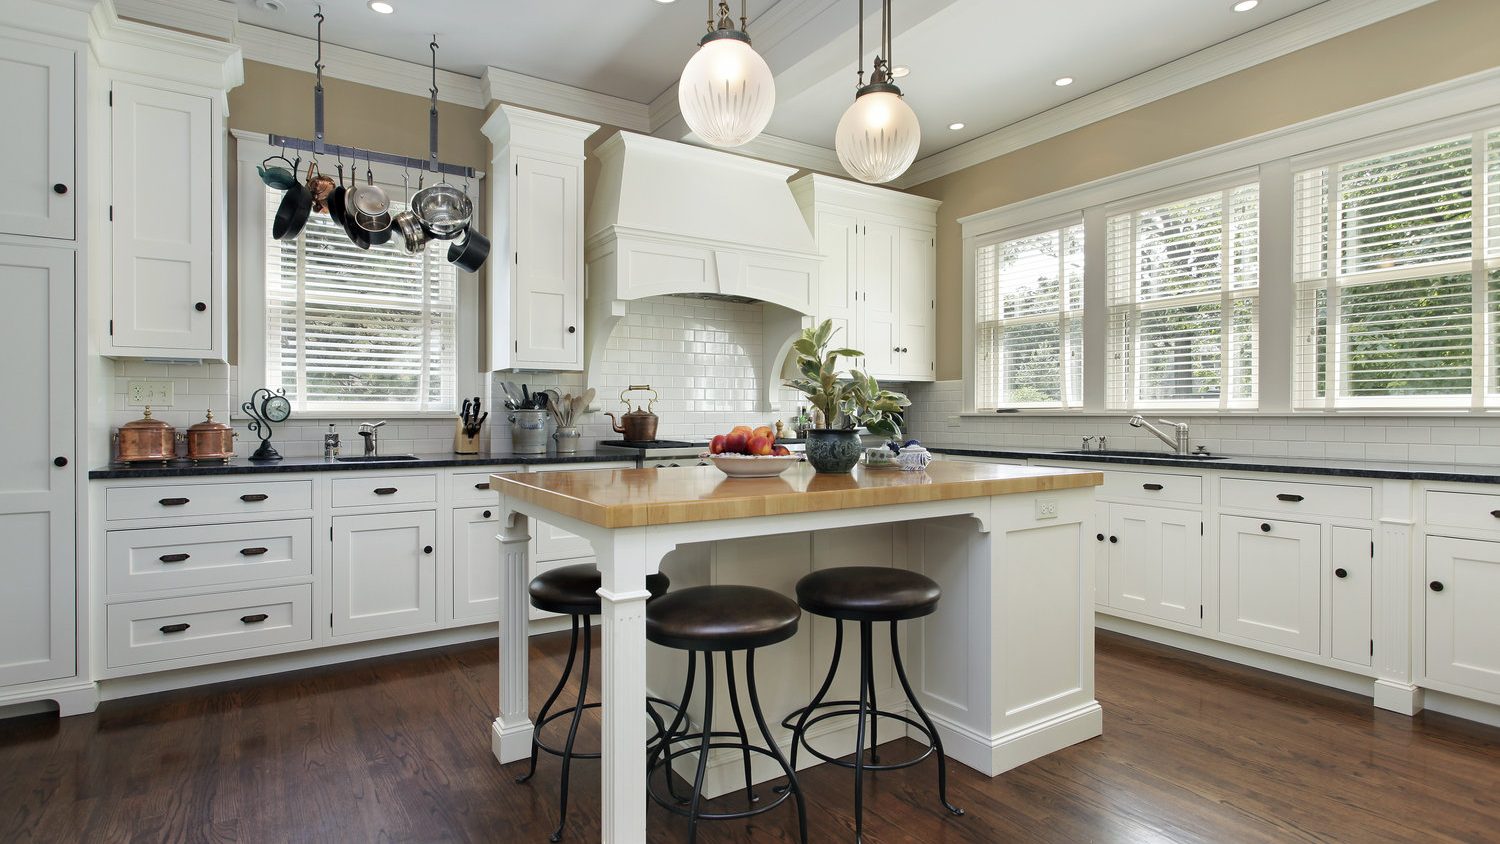 You Can Beautify Your Home Through Interior Design